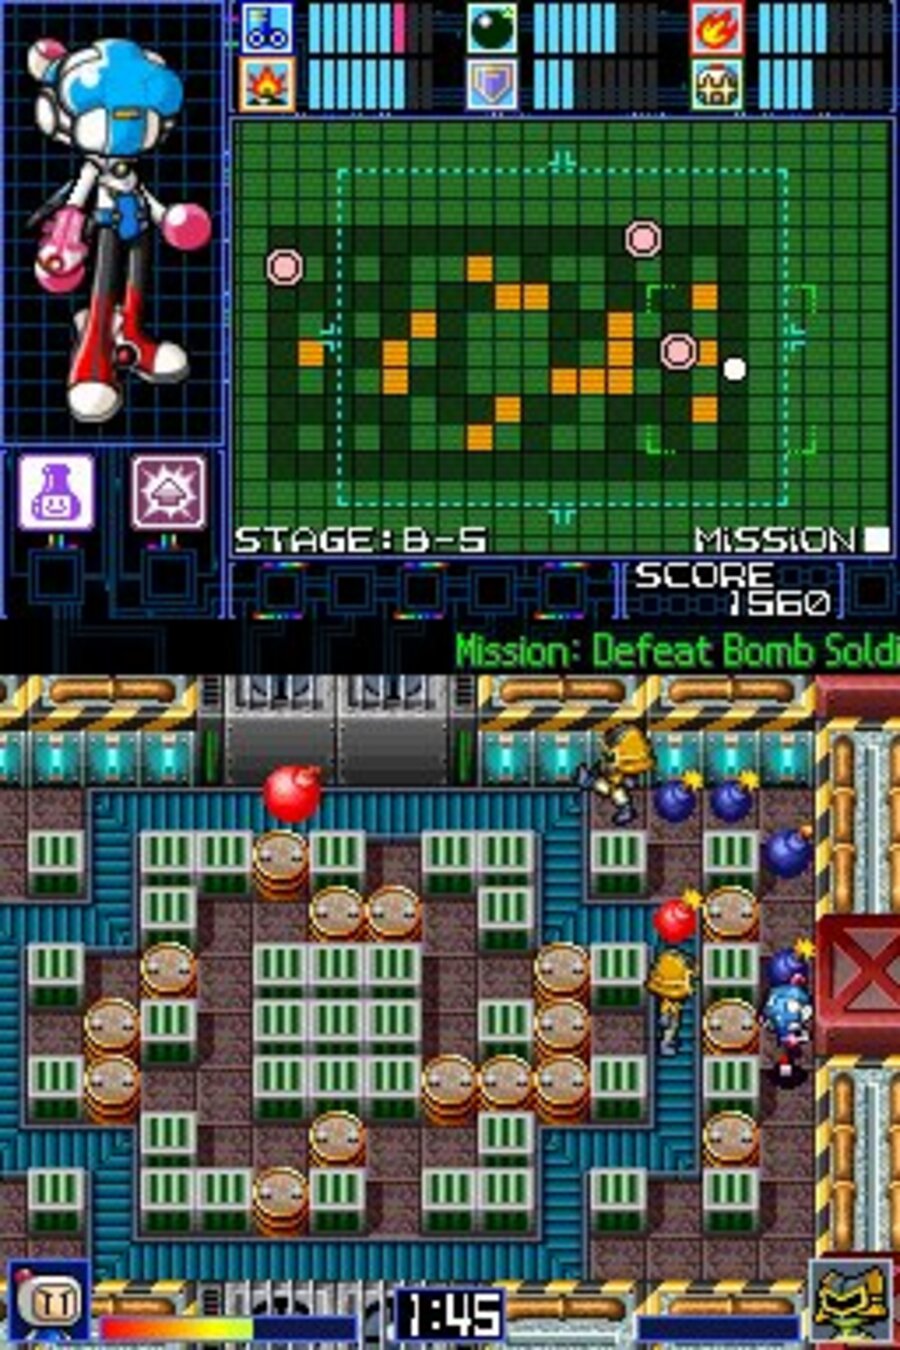 download the last version for windows Bomber Bomberman!